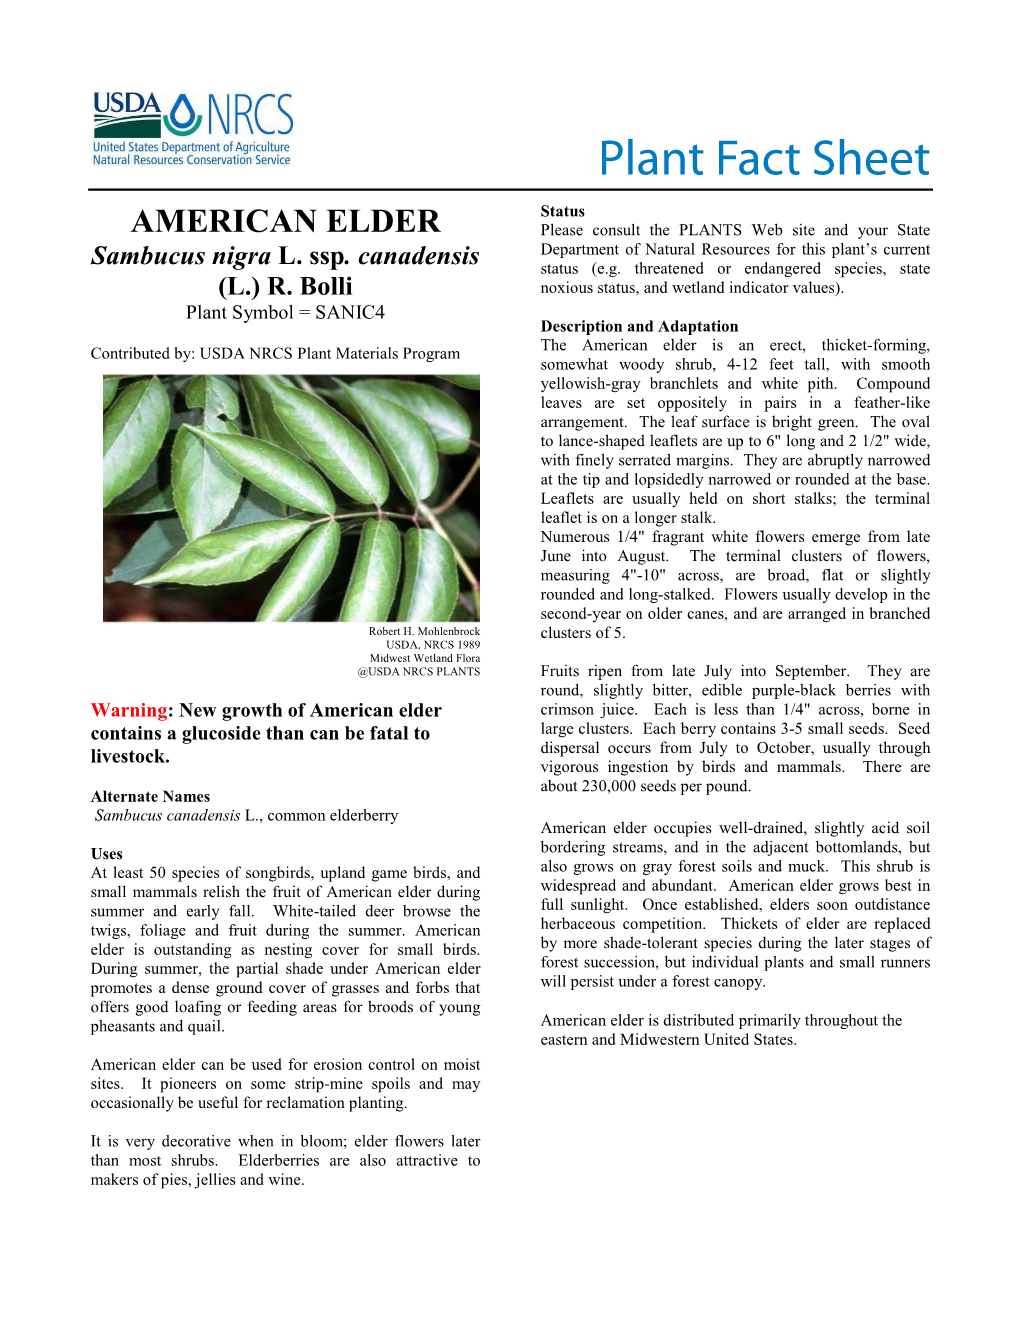 American Elder Plant Fact Sheet